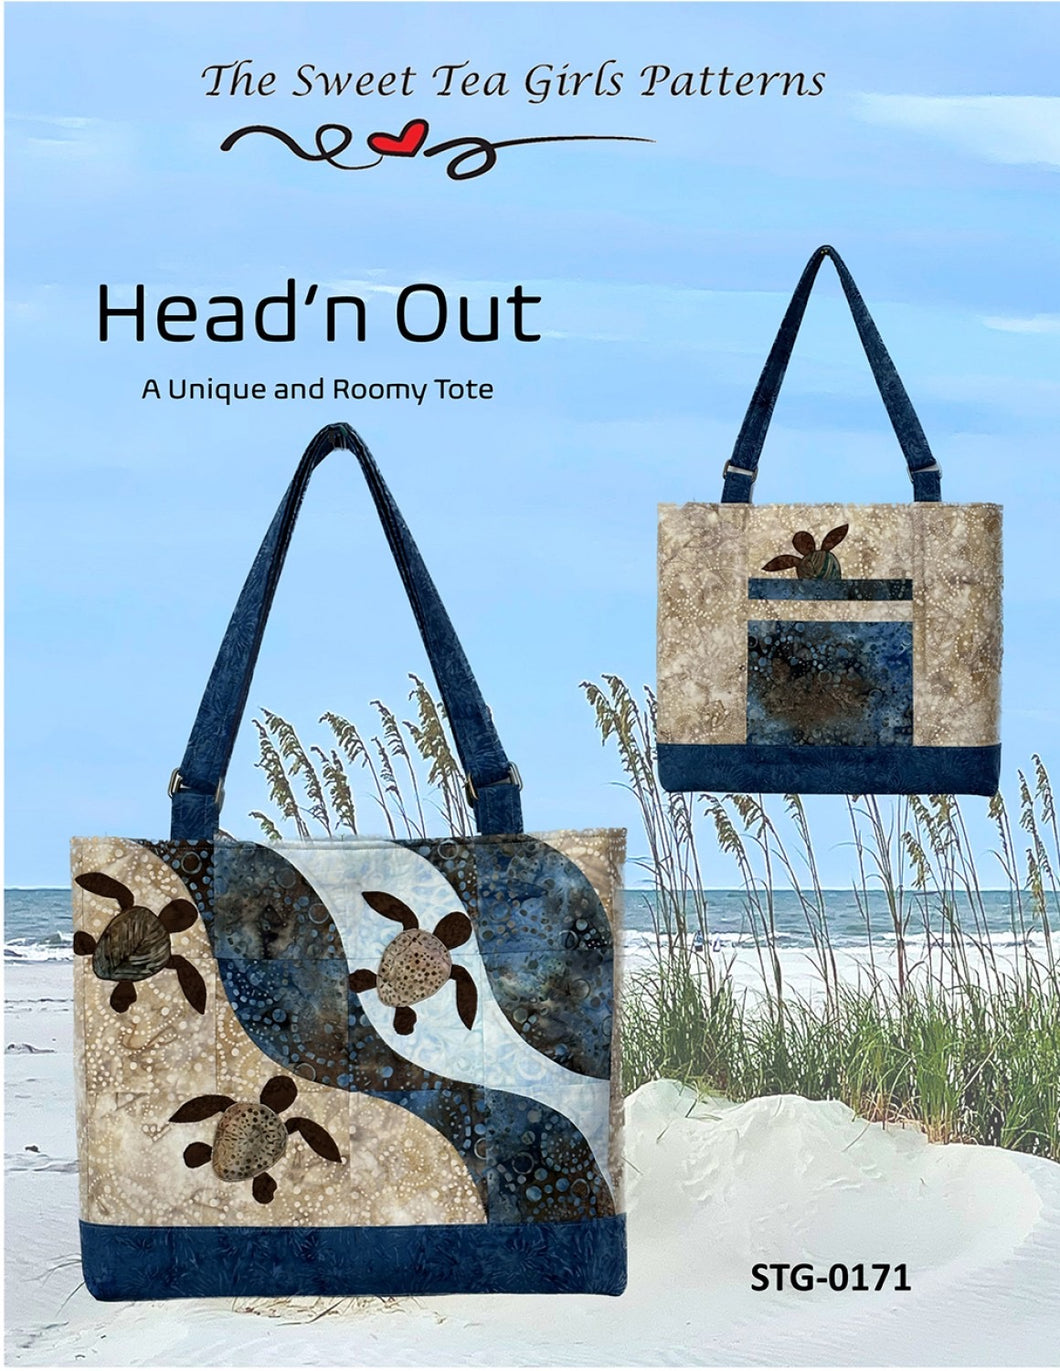 Head'n Out purse pattern